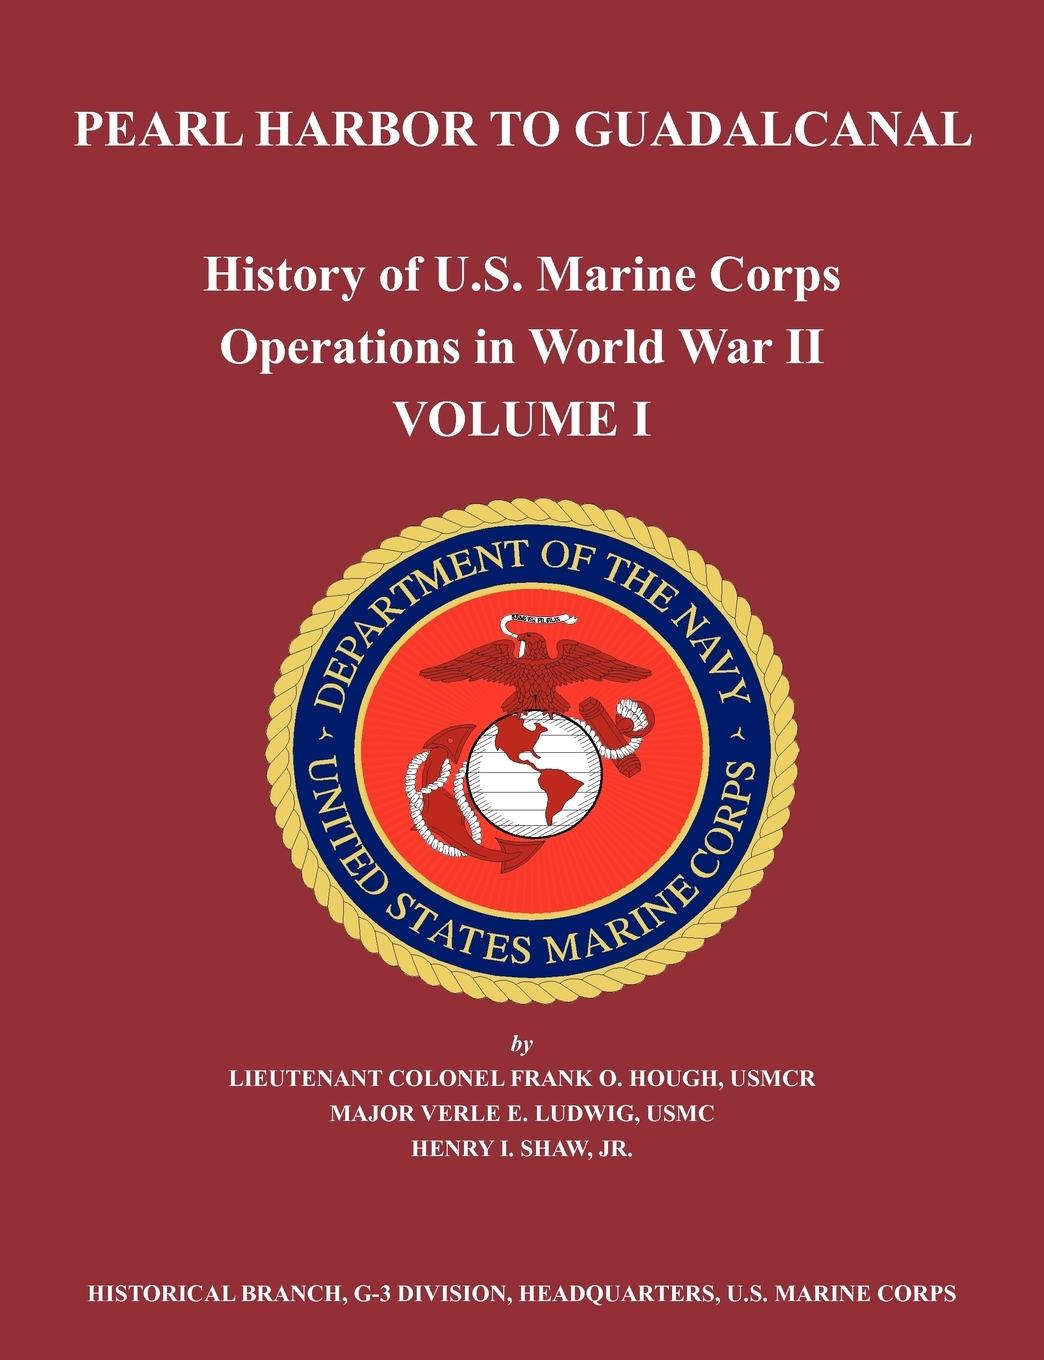 History of U.S. Marine Corps Operations in World War II. Volume I - Hough, Frank O. Ludwig, Verle E. Us Marine Corps Historical Branch